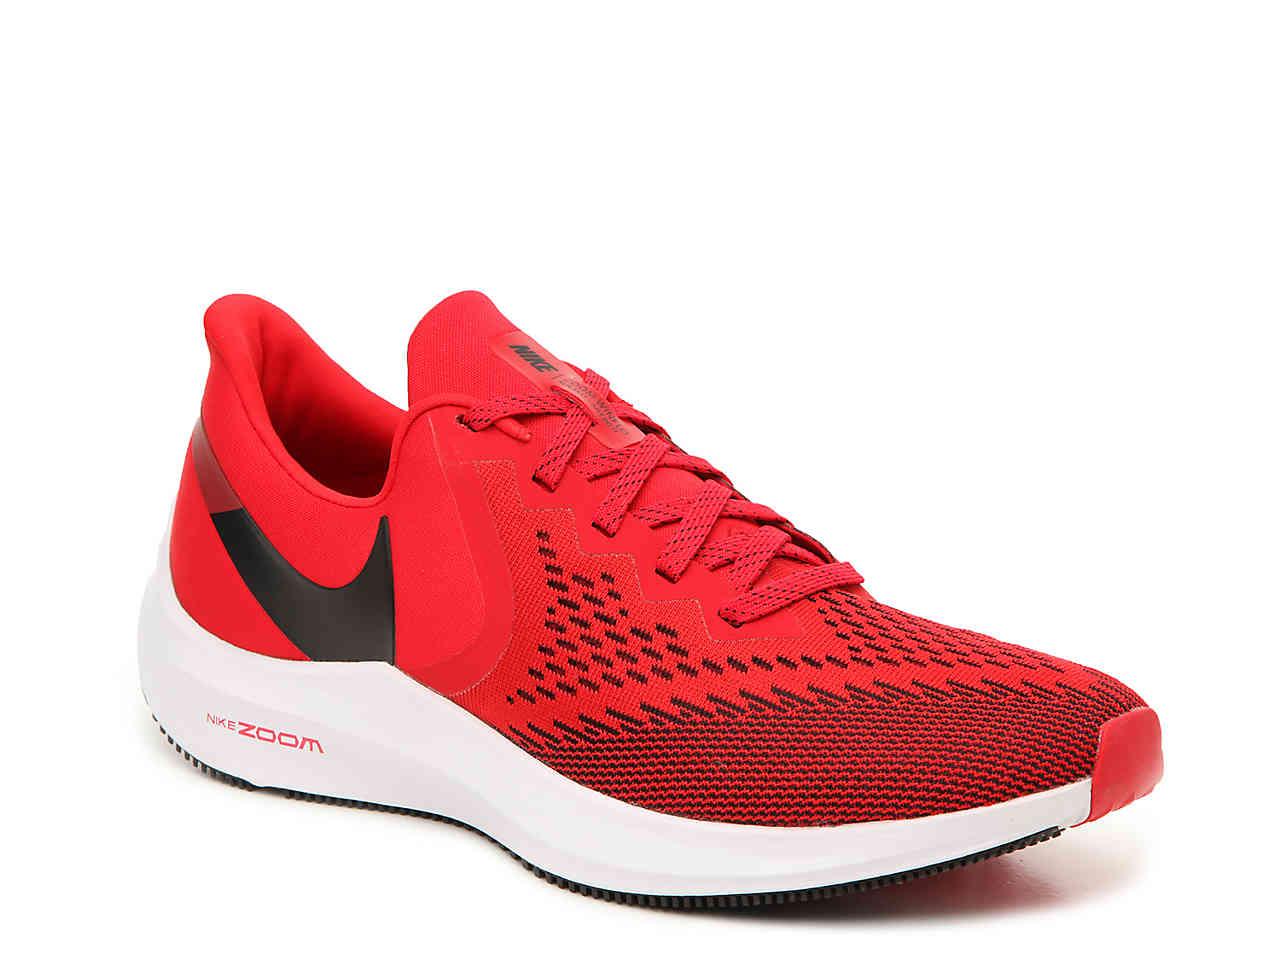 Nike Zoom Winflo 6 Lightweight Running Shoe in Red for Men - Lyst